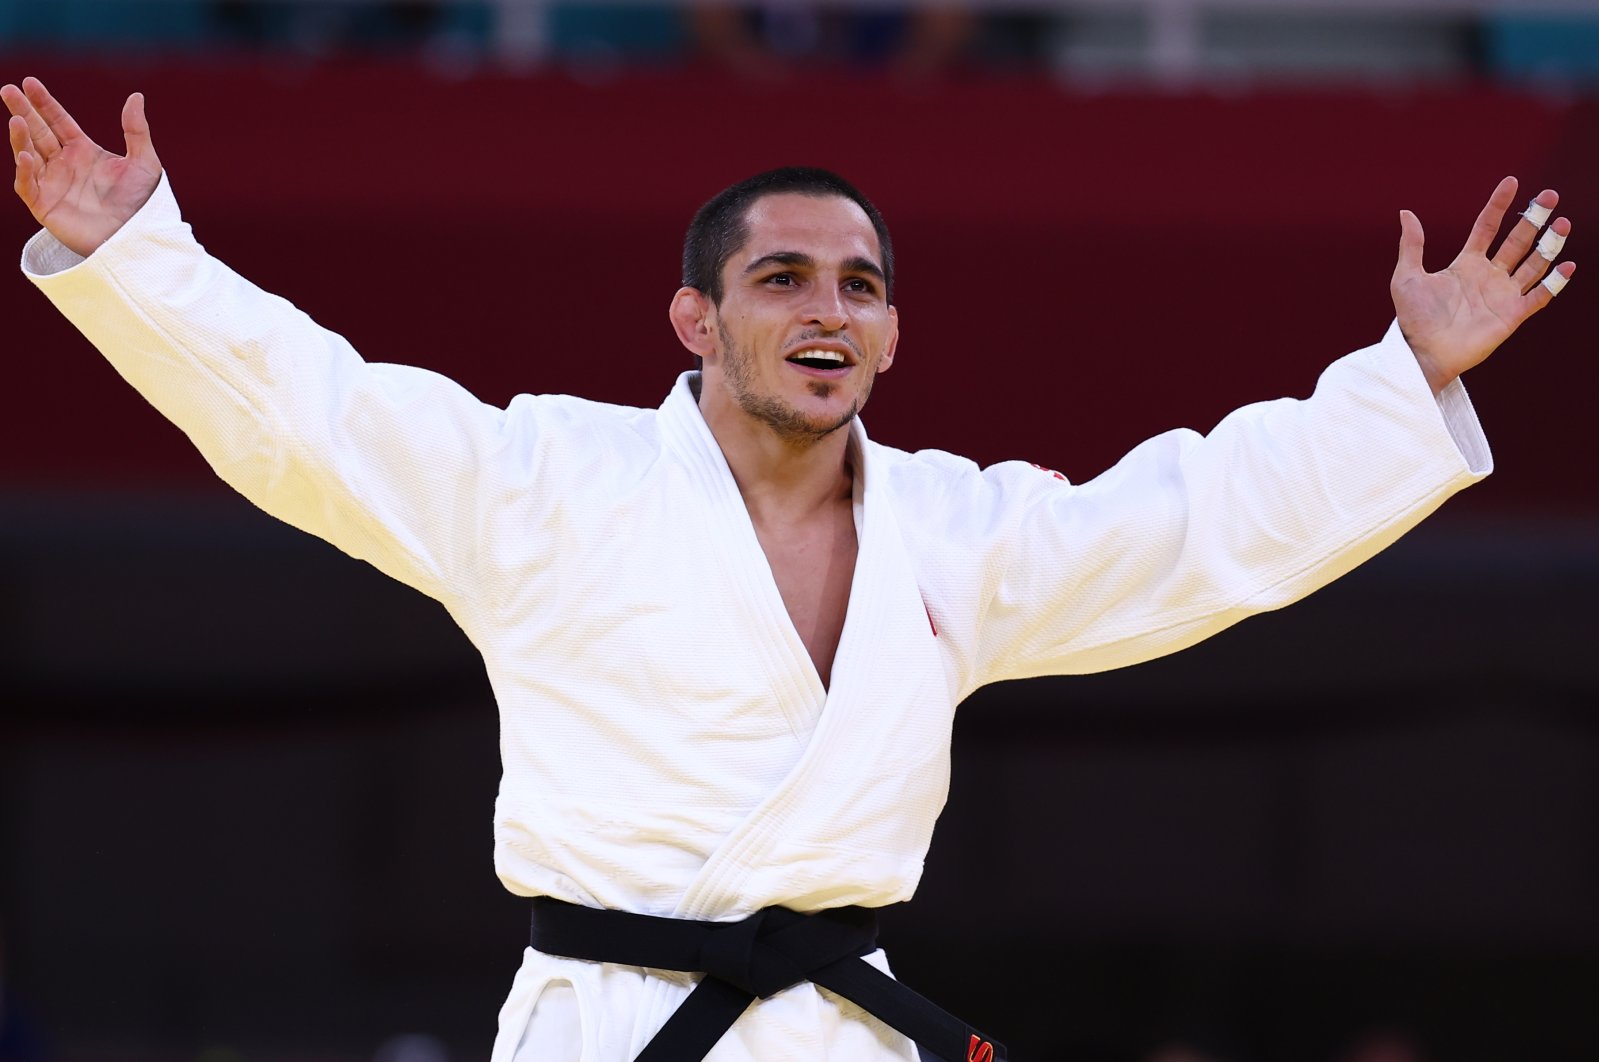 Turkish judoka Recep Çifçi celebrates after winning his match against Venezuela's Marcos Dennis Blanco at the Tokyo 2020 Paralympics, in Tokyo, Japan, Aug. 27, 2021. (Reuters Photo)
